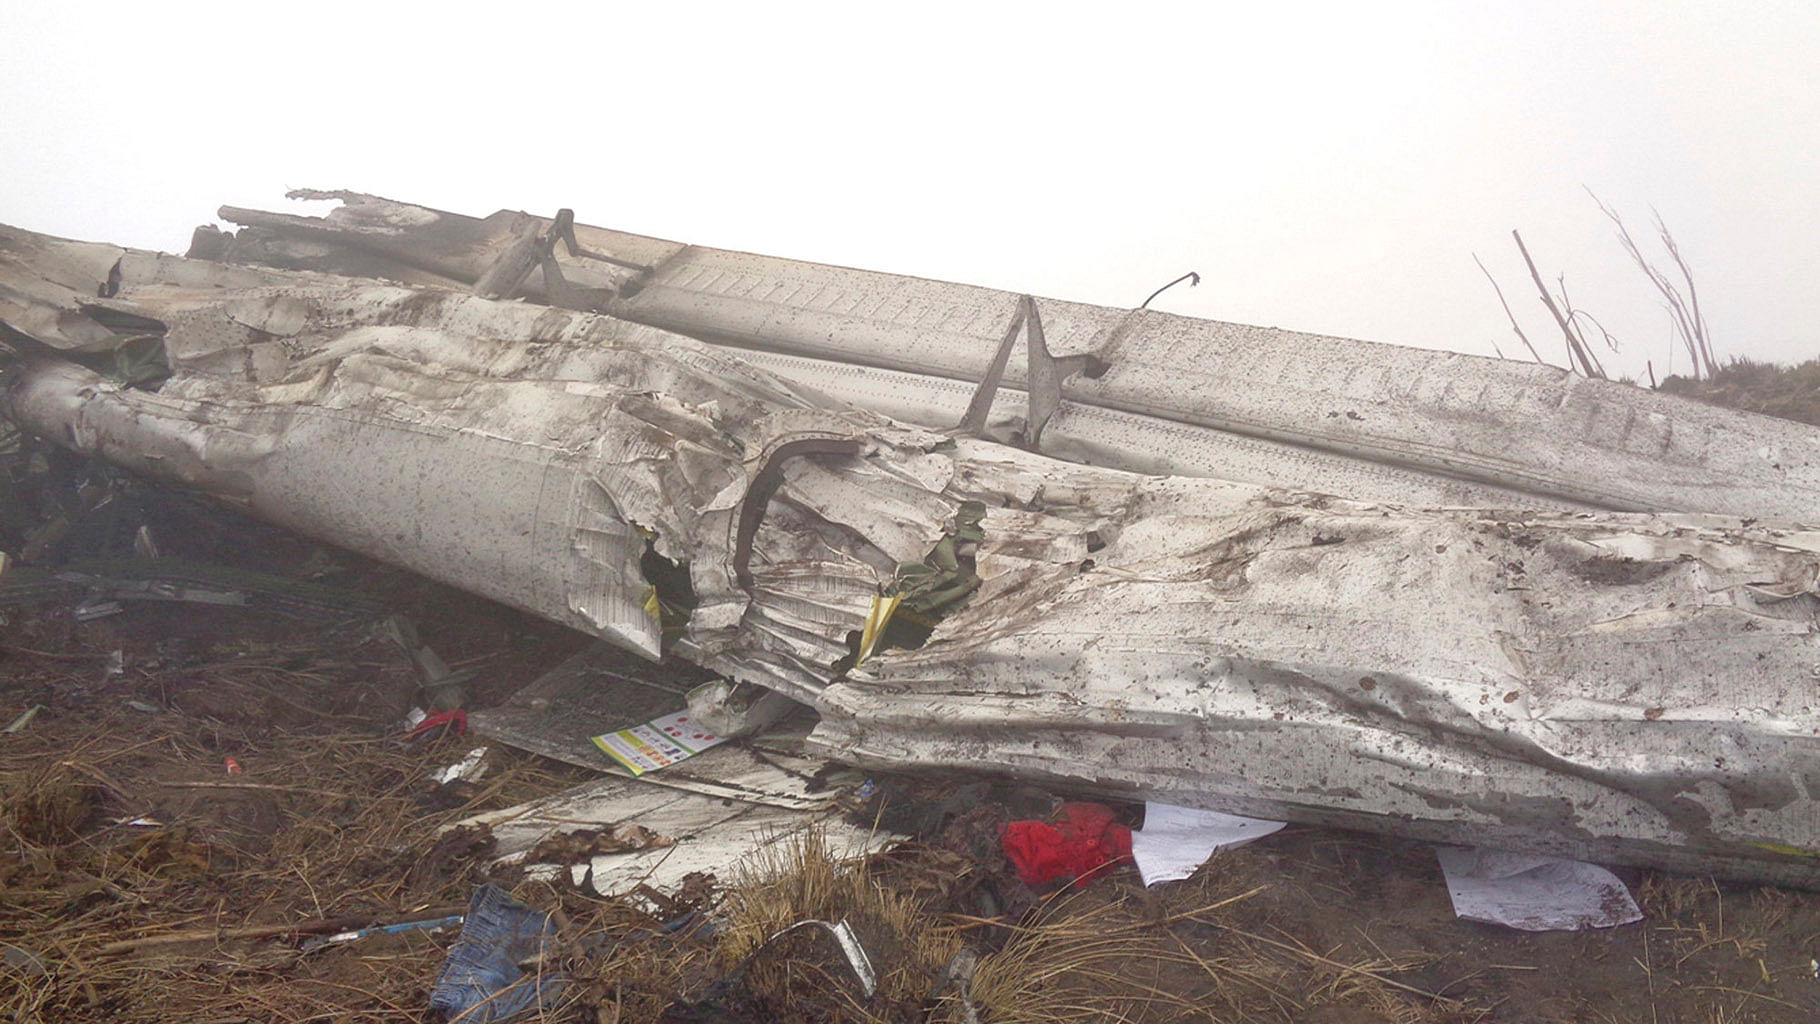 Part of the wreckage of a
plane lies near Rupshe village in Katmandu, 24 February 2016. (Photo: AP)